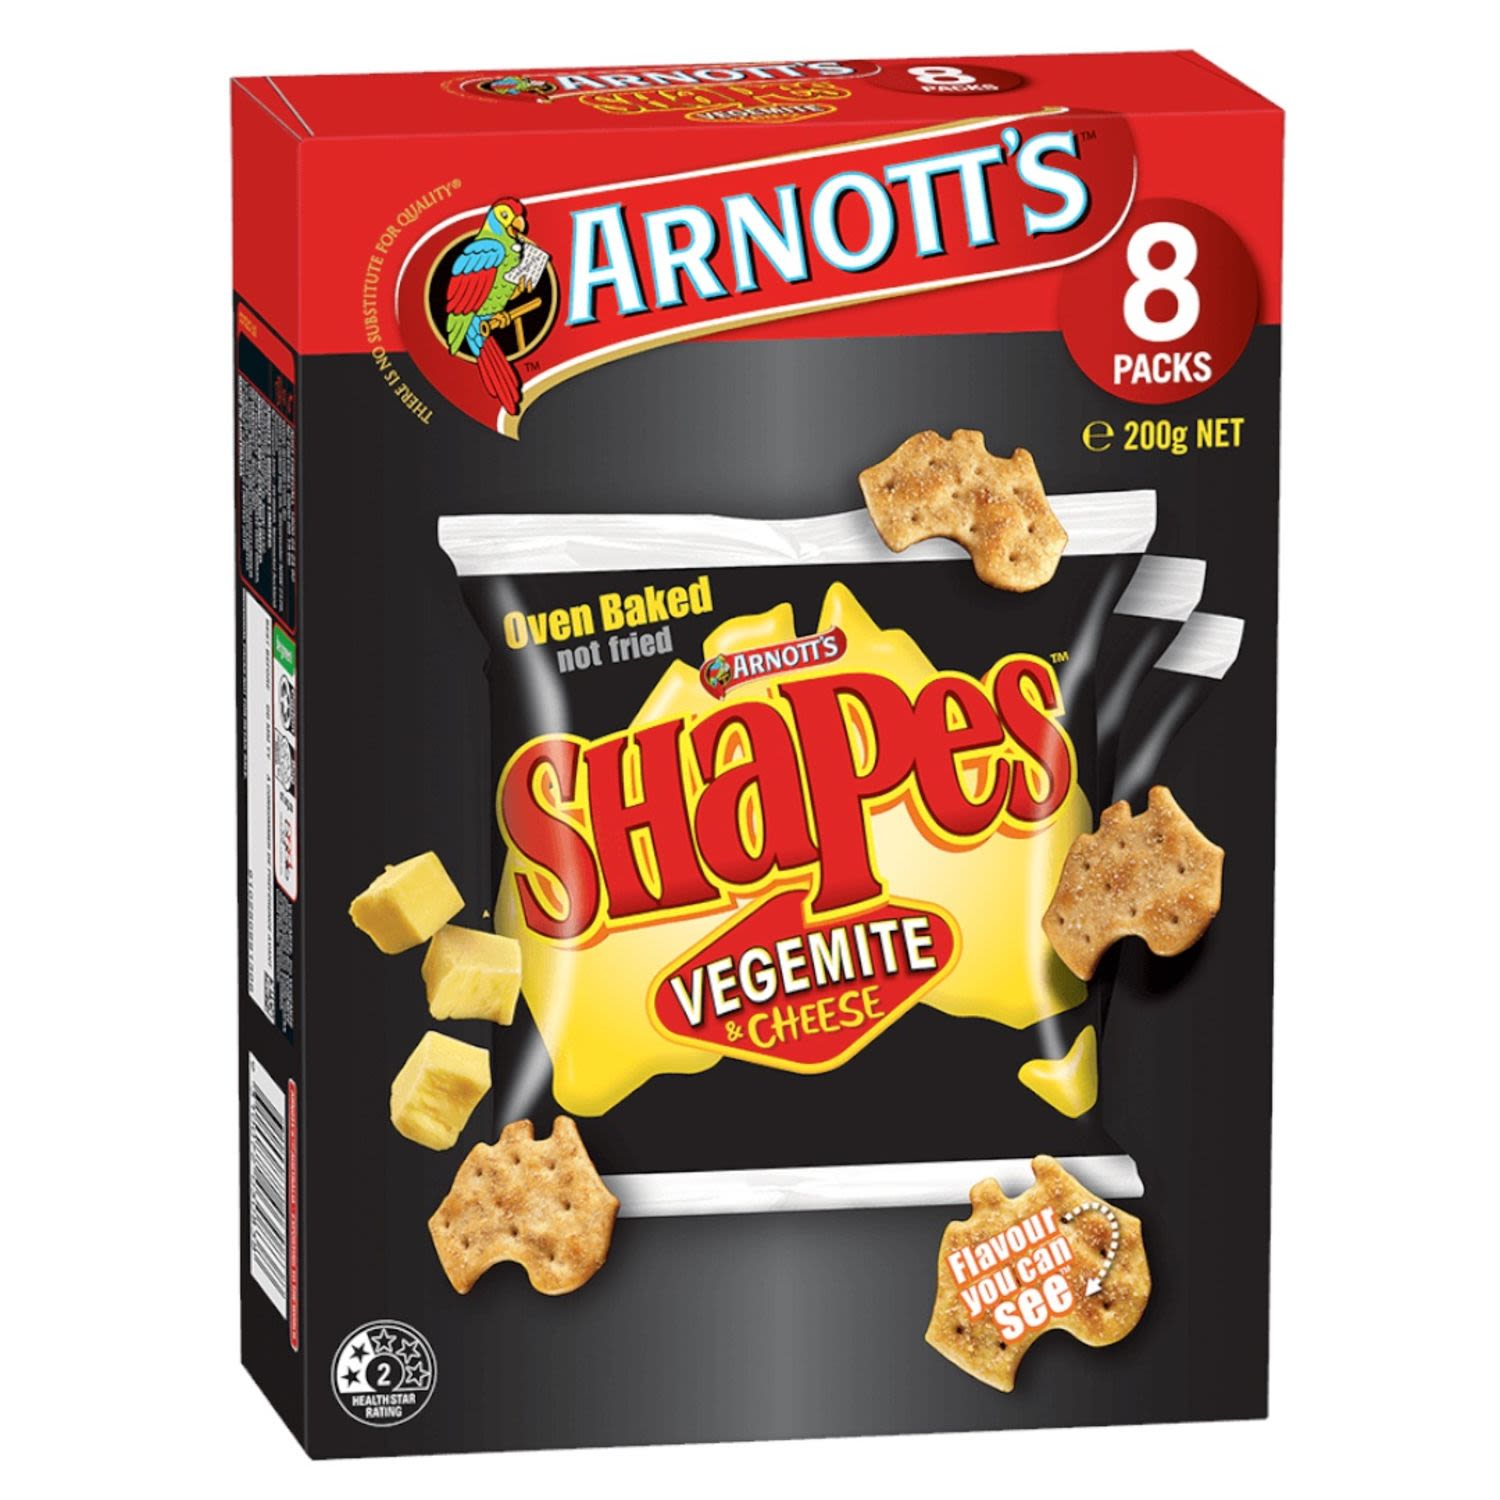 Arnotts Shapes Vegemite & Cheese 8pk